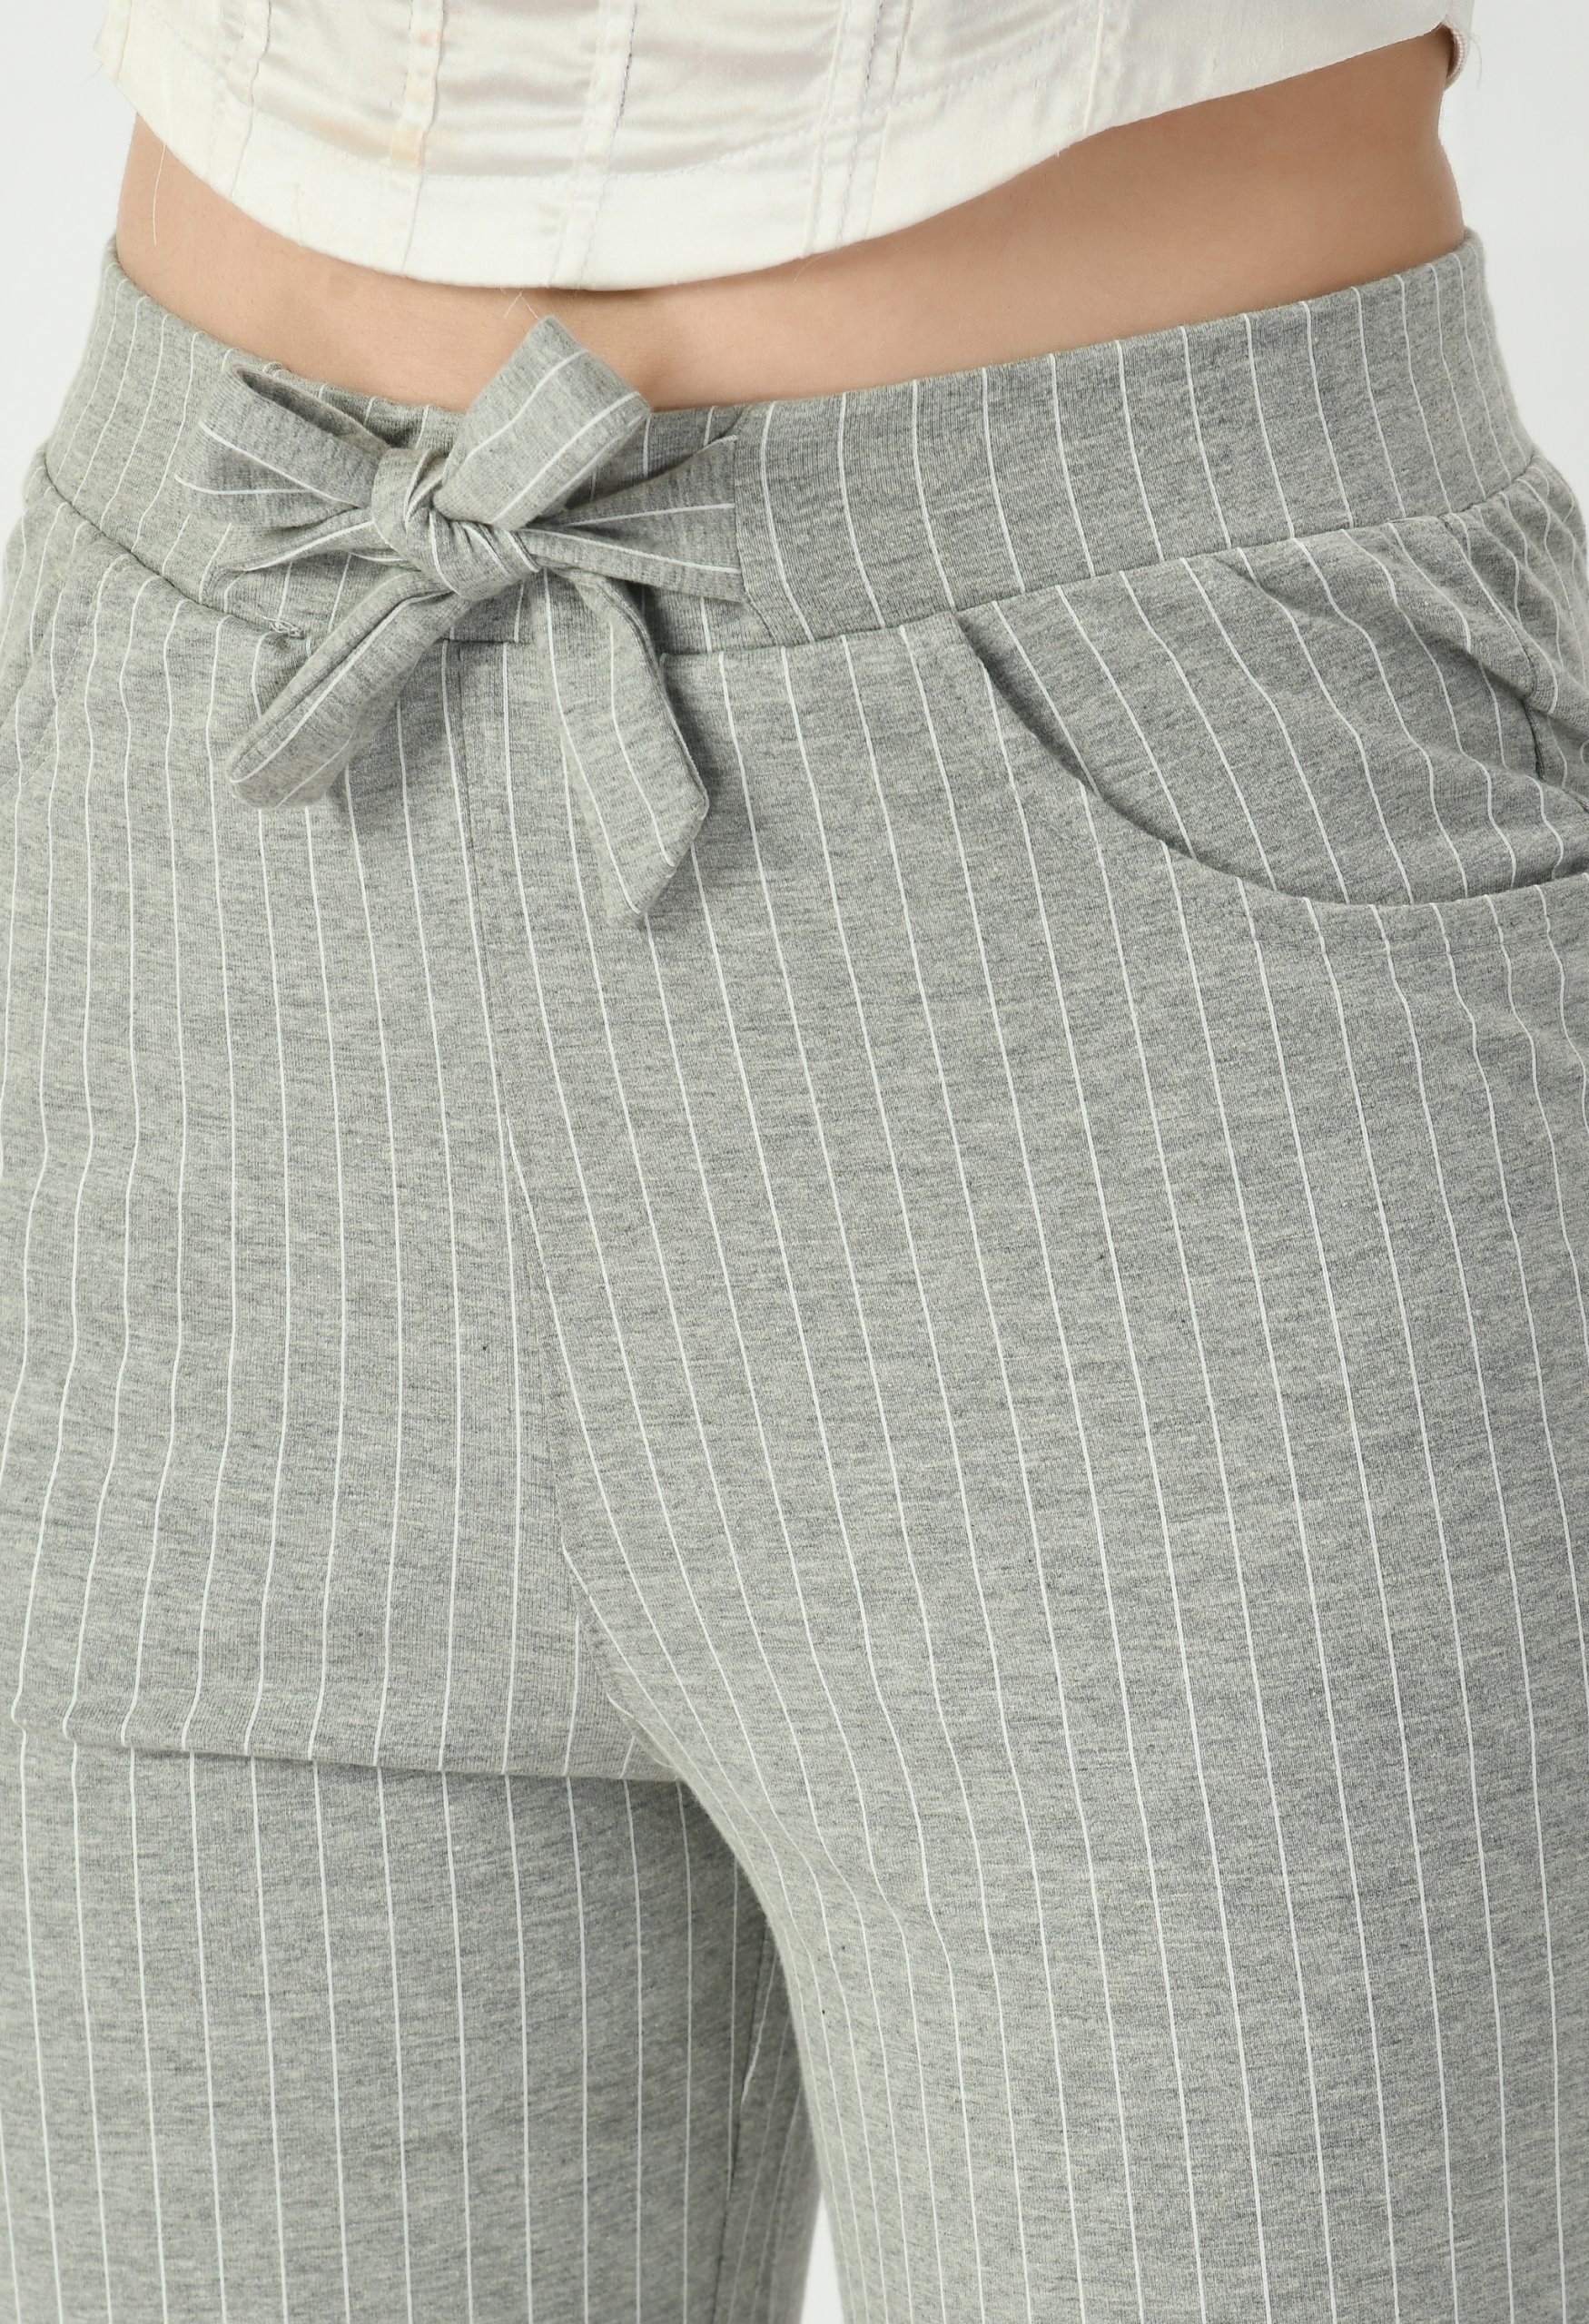 Grey Coloured Trouser by Deerdo